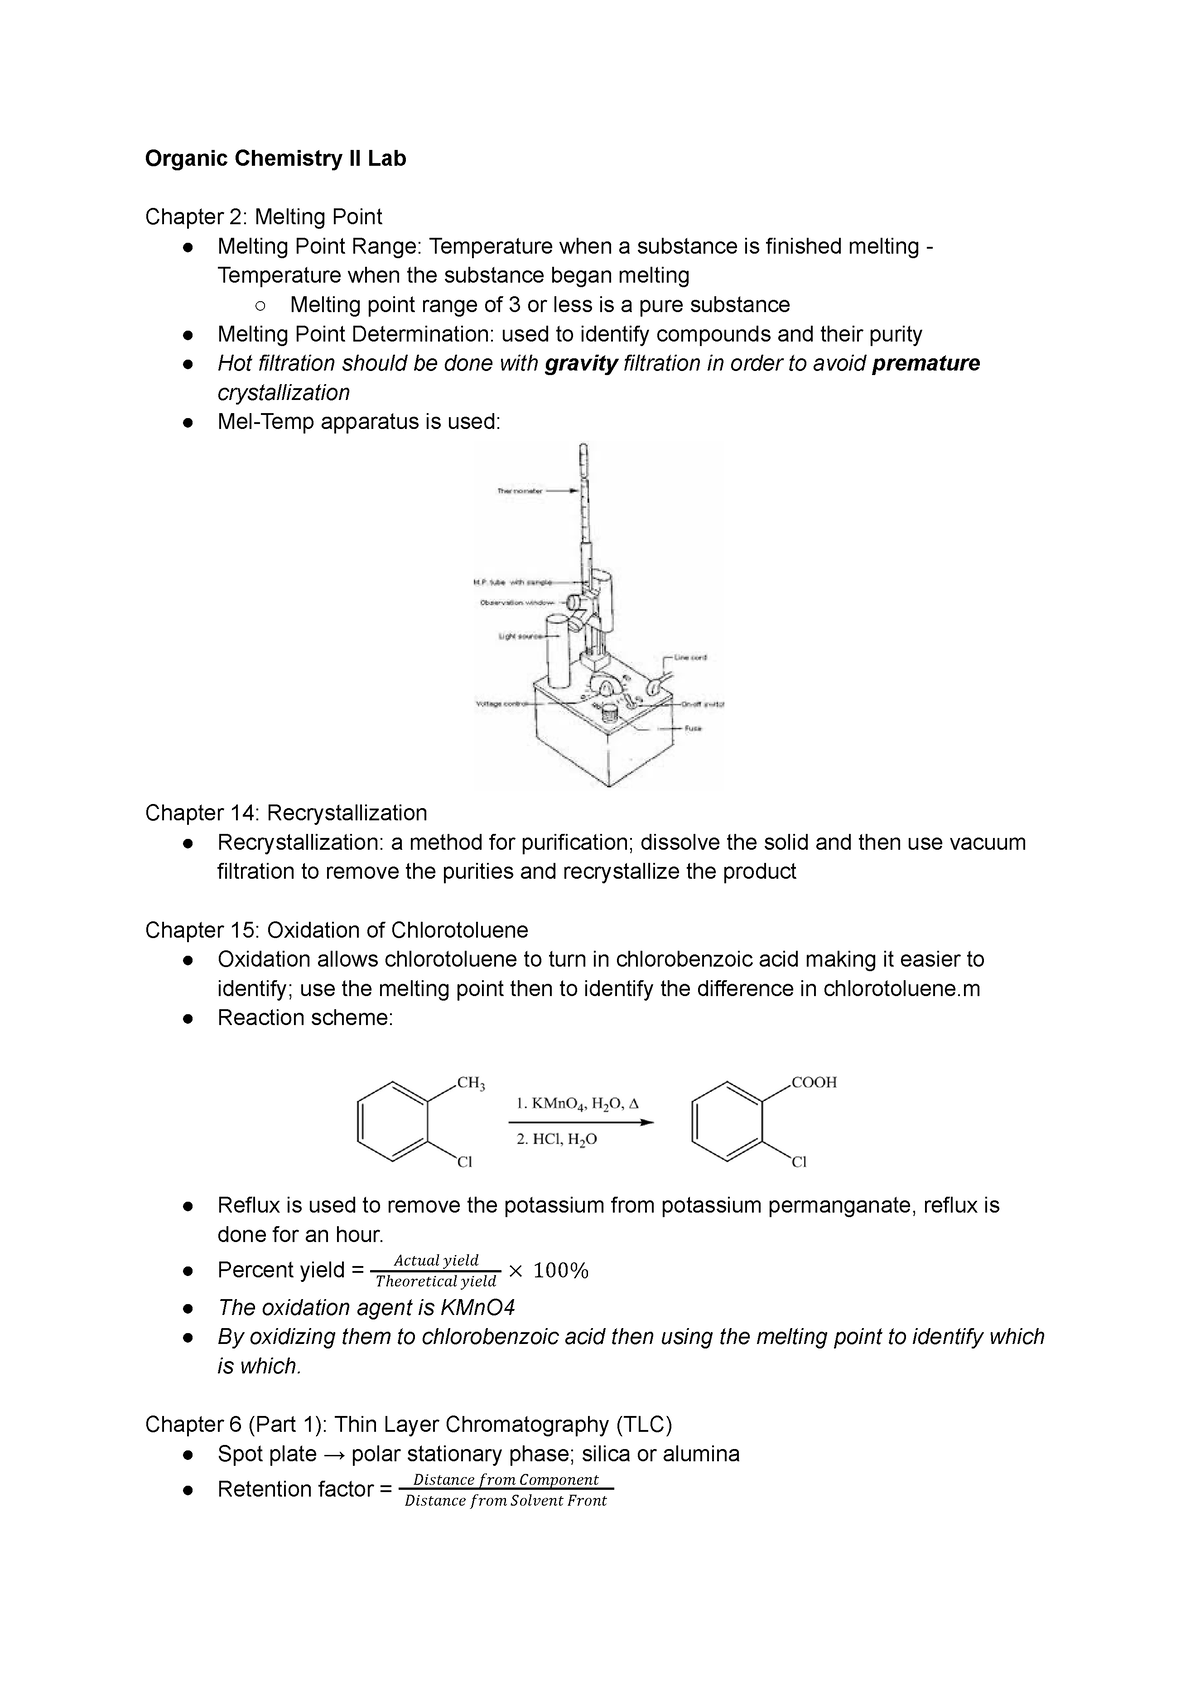 Organic Chemistry II Lab Organic Chemistry II Lab Chapter 2 Melting